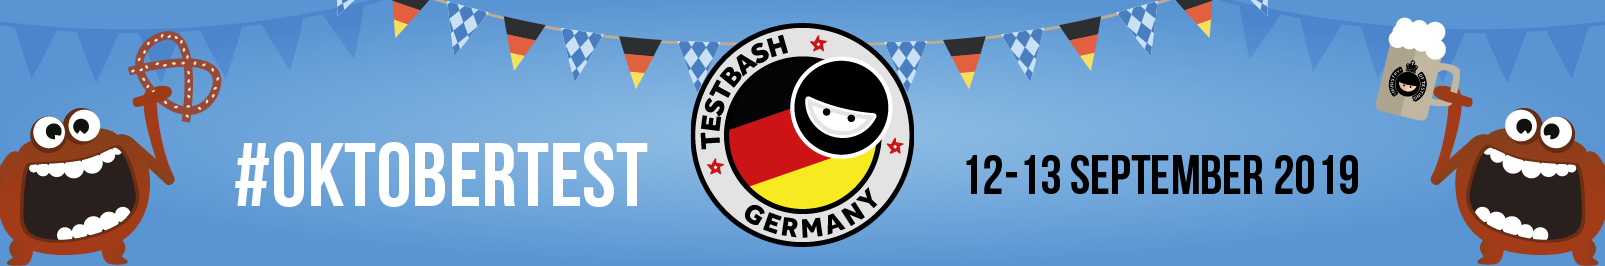 TestBash Germany 2019 banner image